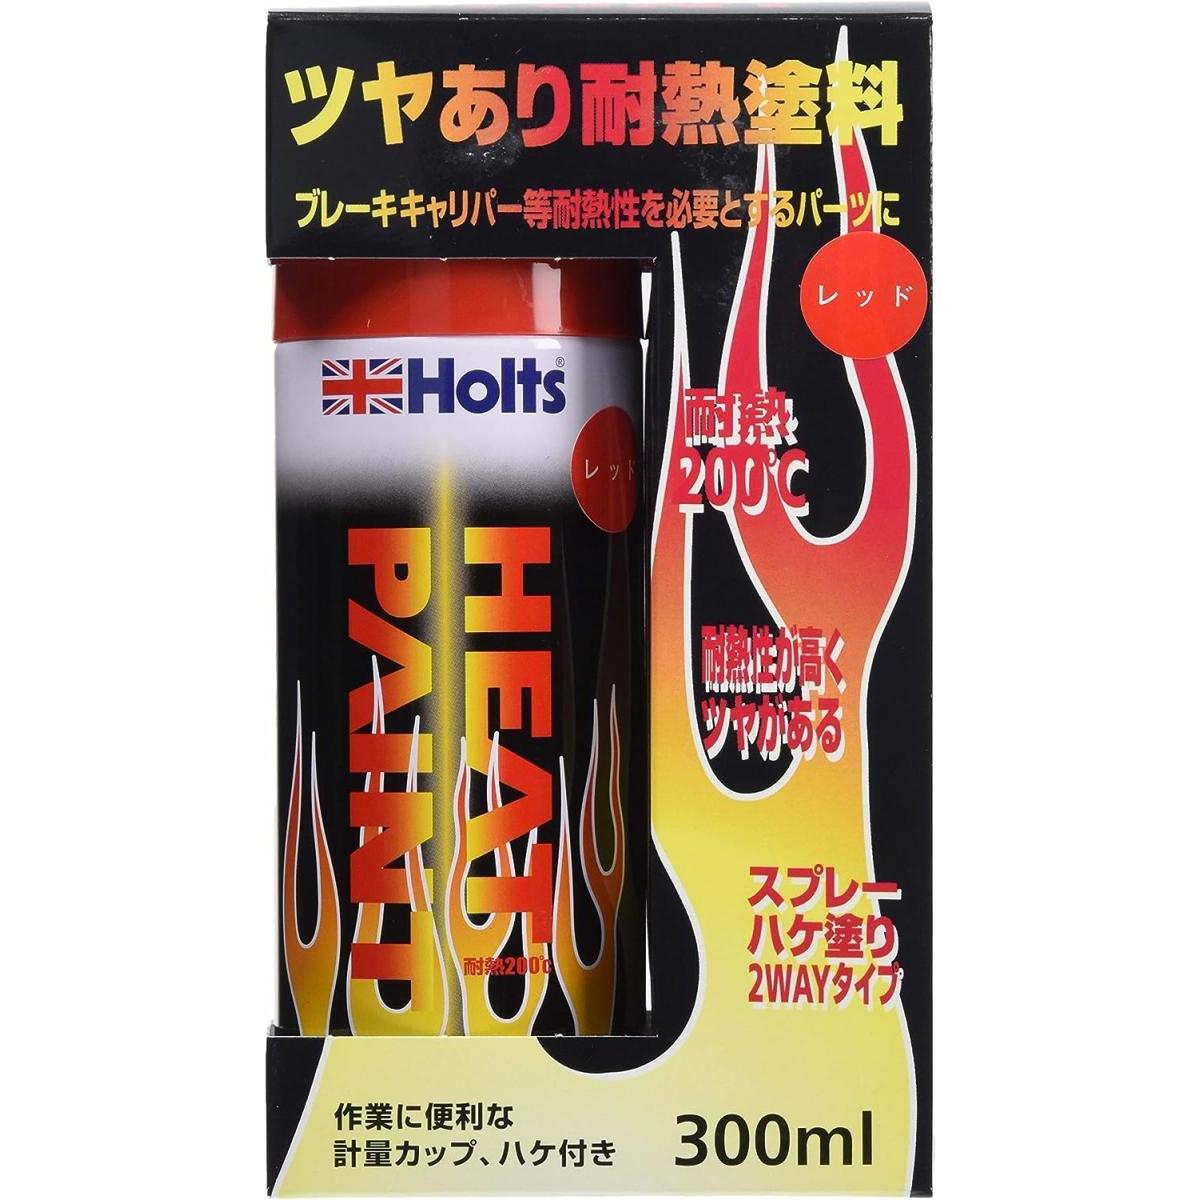 Holts(ホルツ) ホルツ ペイント塗料 耐熱塗料 ヒートペイント レッド 耐熱温度 200C 艶ありタイプ 300ml Holts MH11250